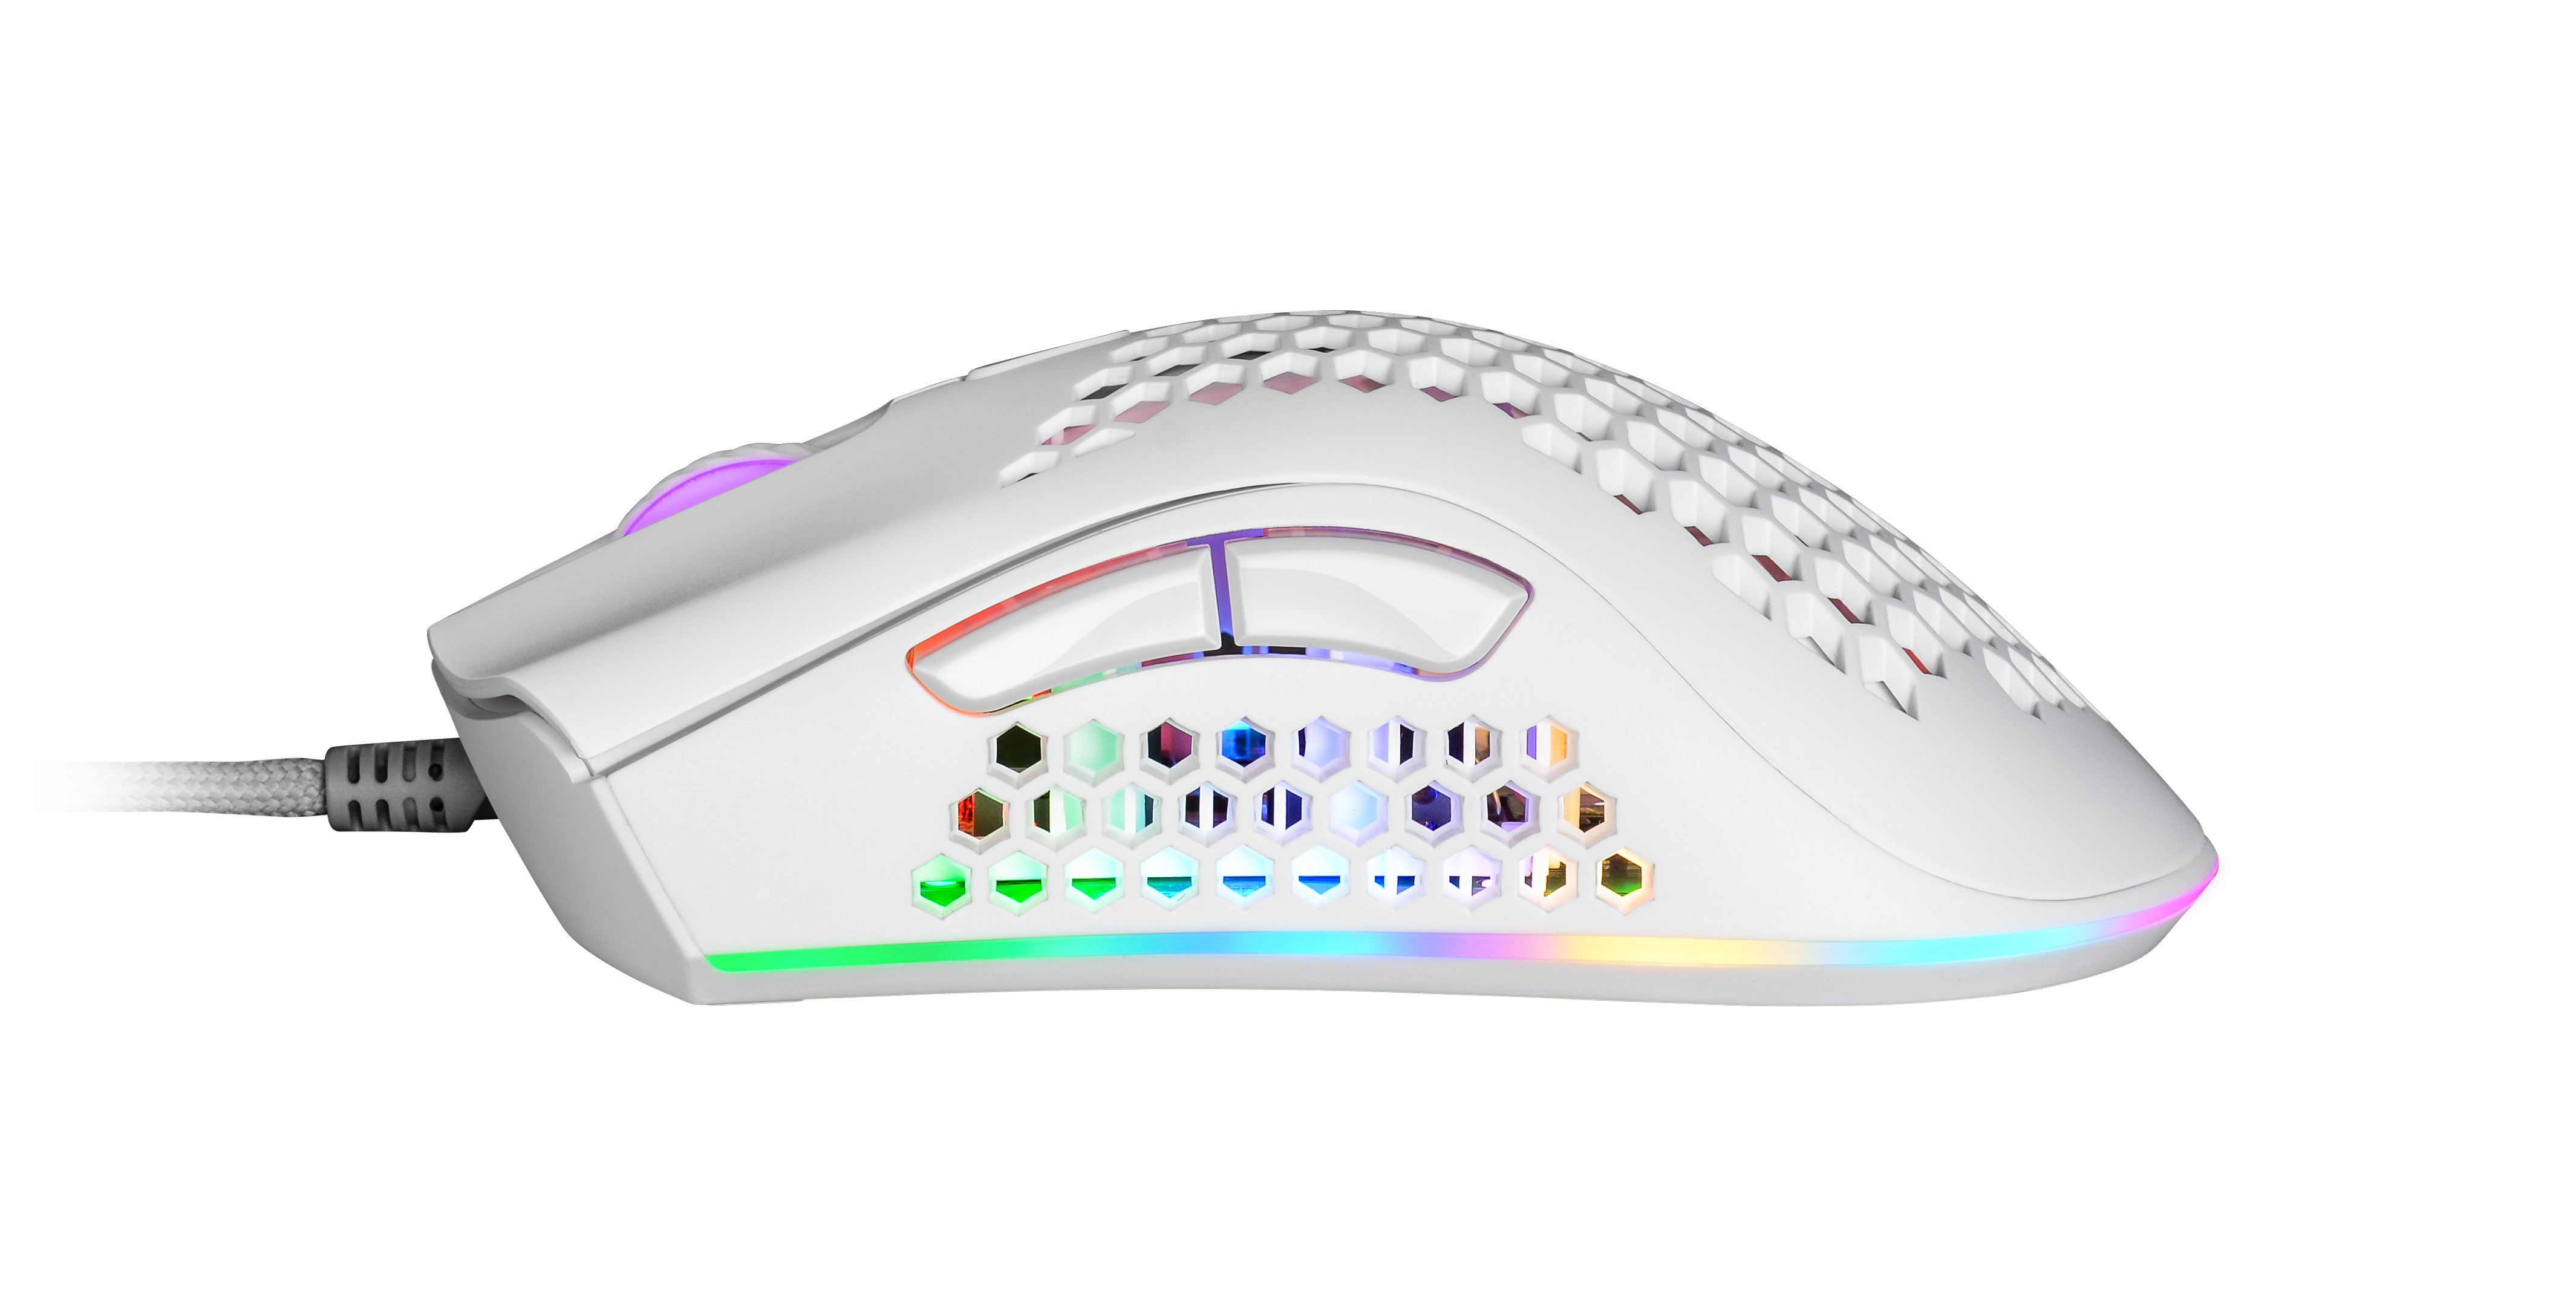 Gaming RGB IGM-4500-WT Honeycomb ISY Weiß Maus,